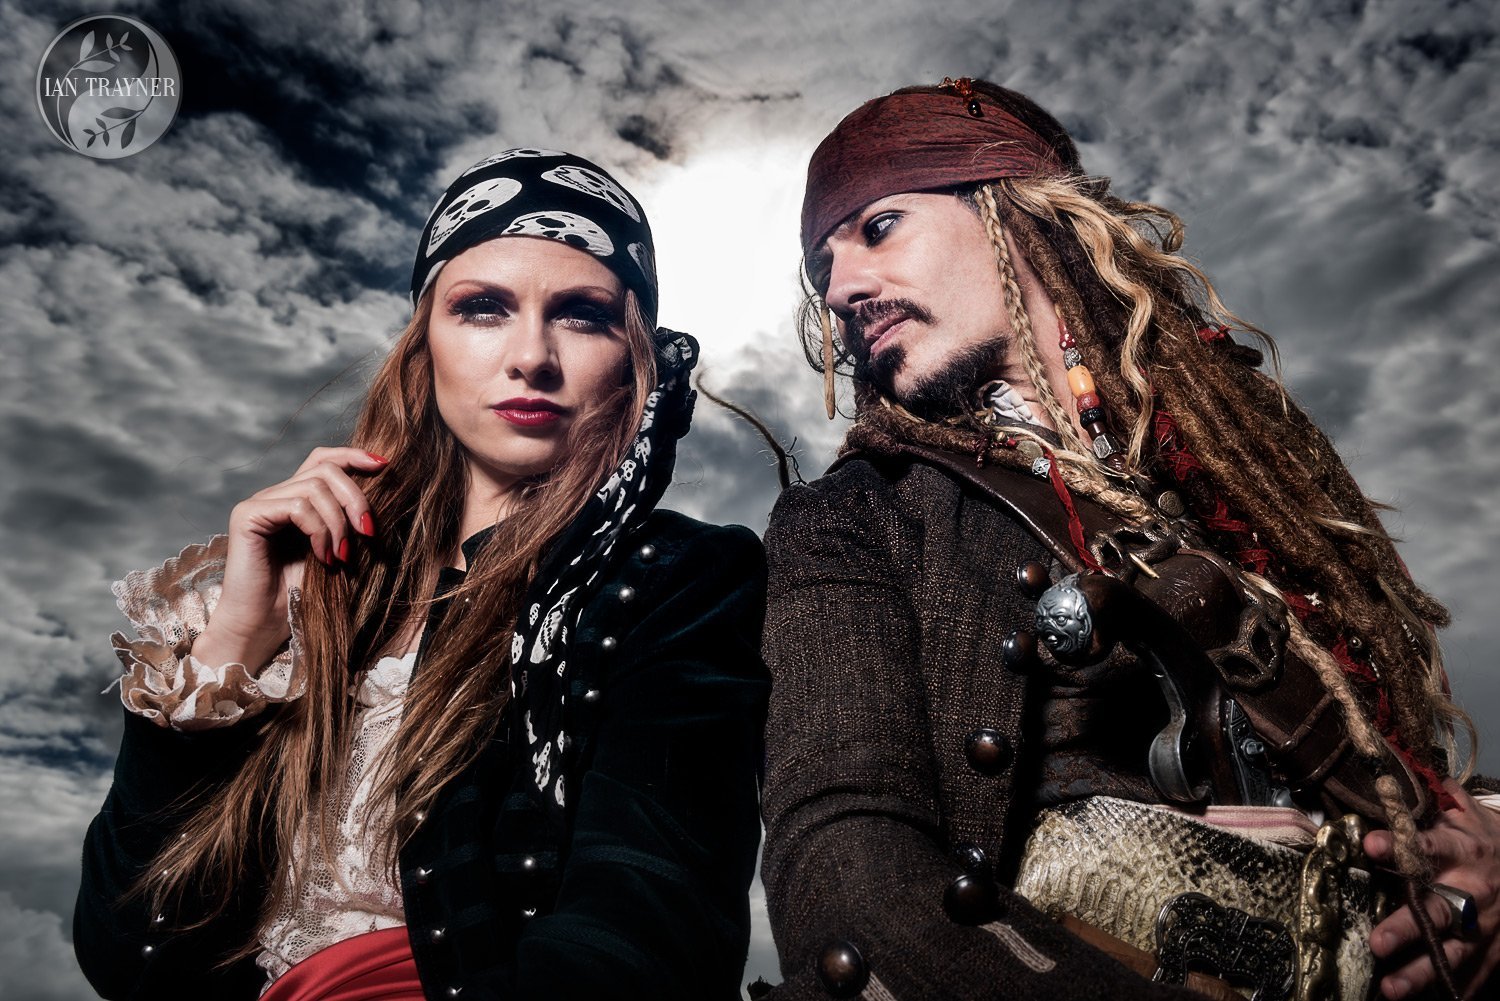 Captain Jack Sparrow lookalike Simon Newton in cosplay location photo shoot